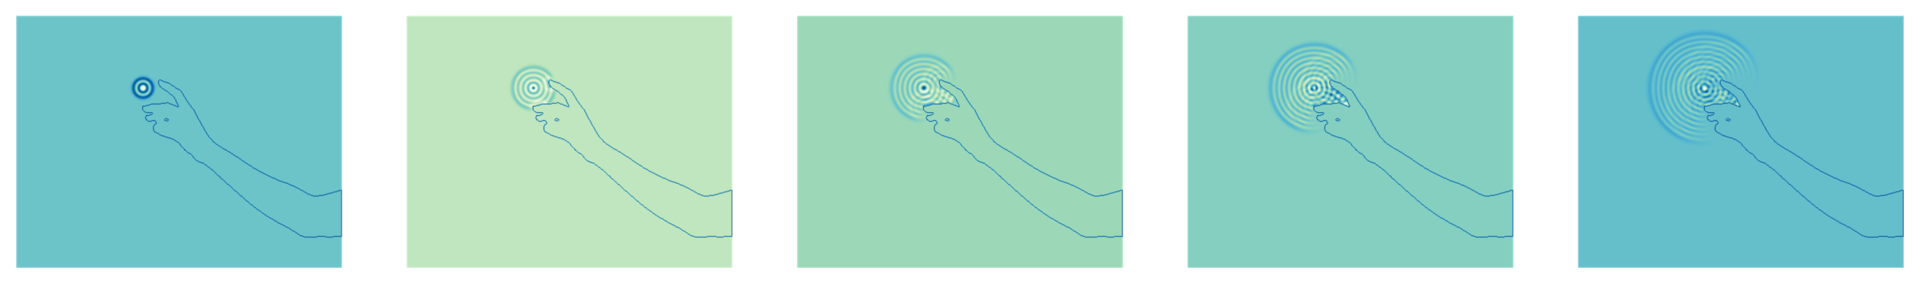 Bildet viser en bølge som forplanter seg omkring en hånd